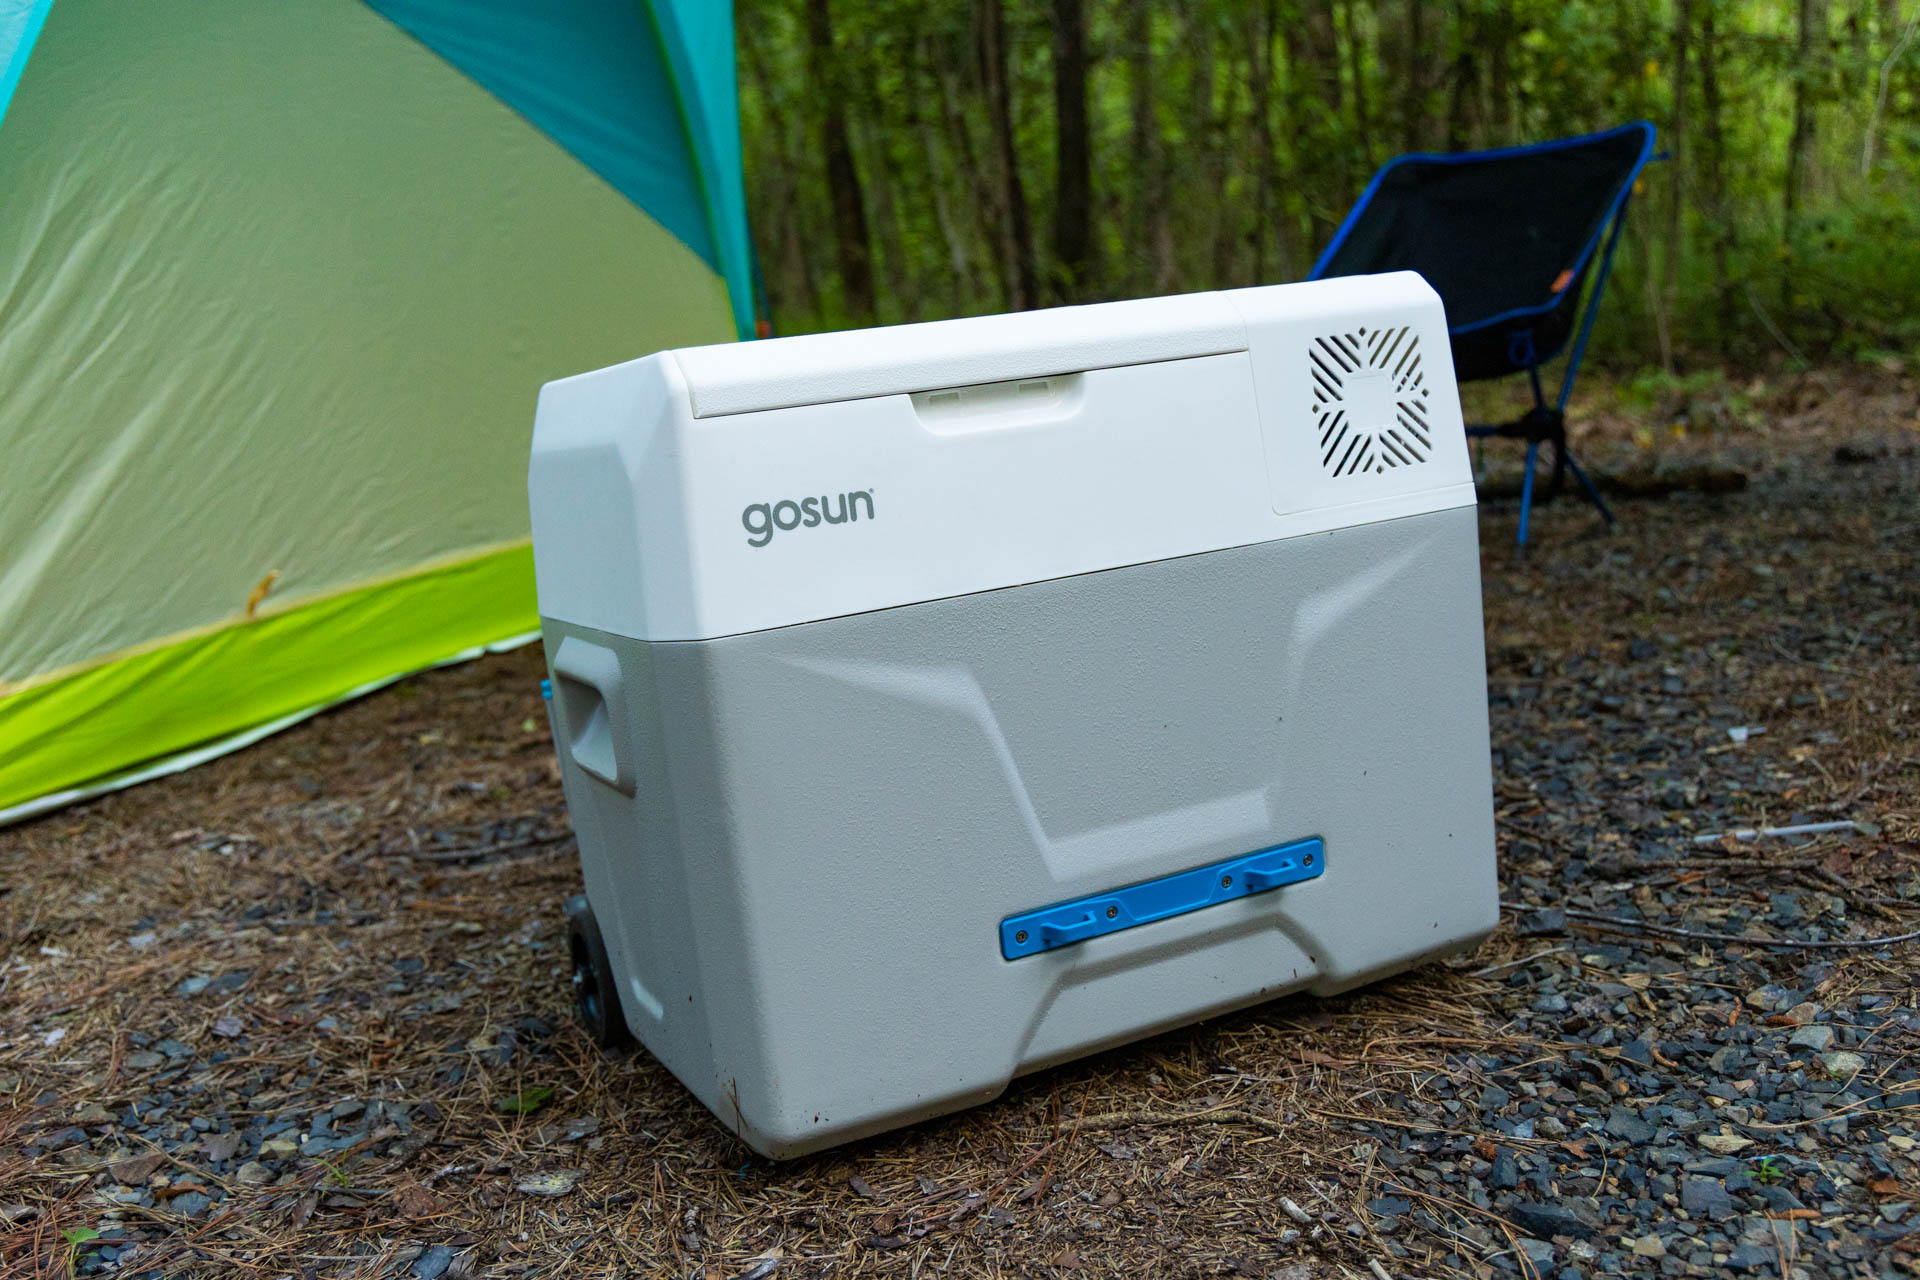 Gosun Chillest | Portable Electric Cooler/Freezer